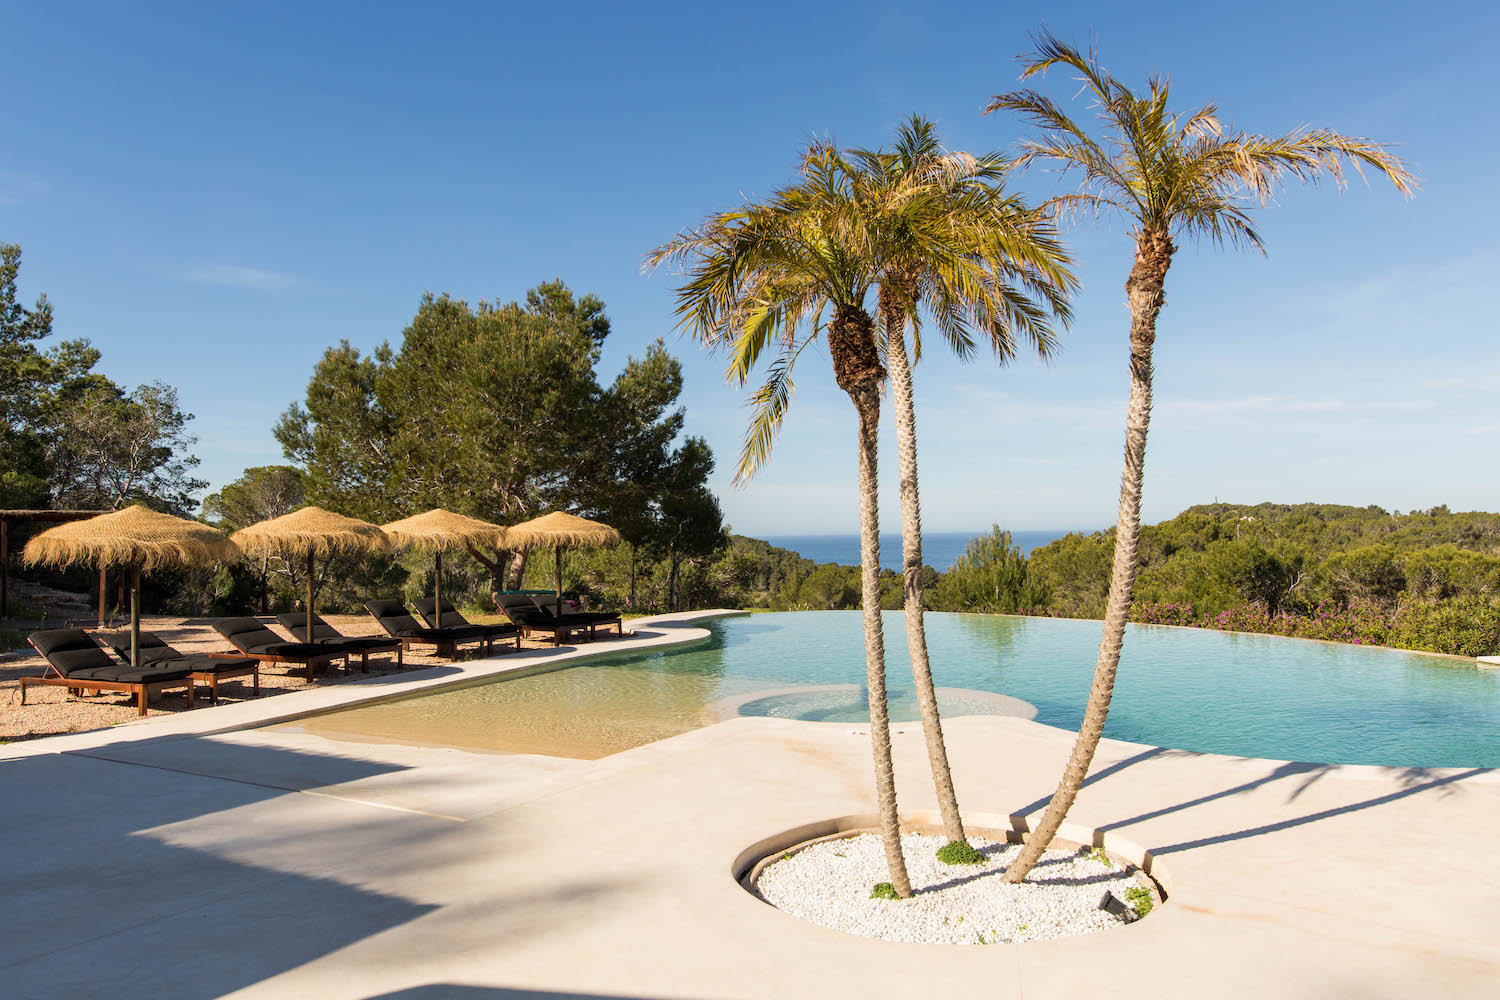 Winter Retreat in Ibiza, January 2020